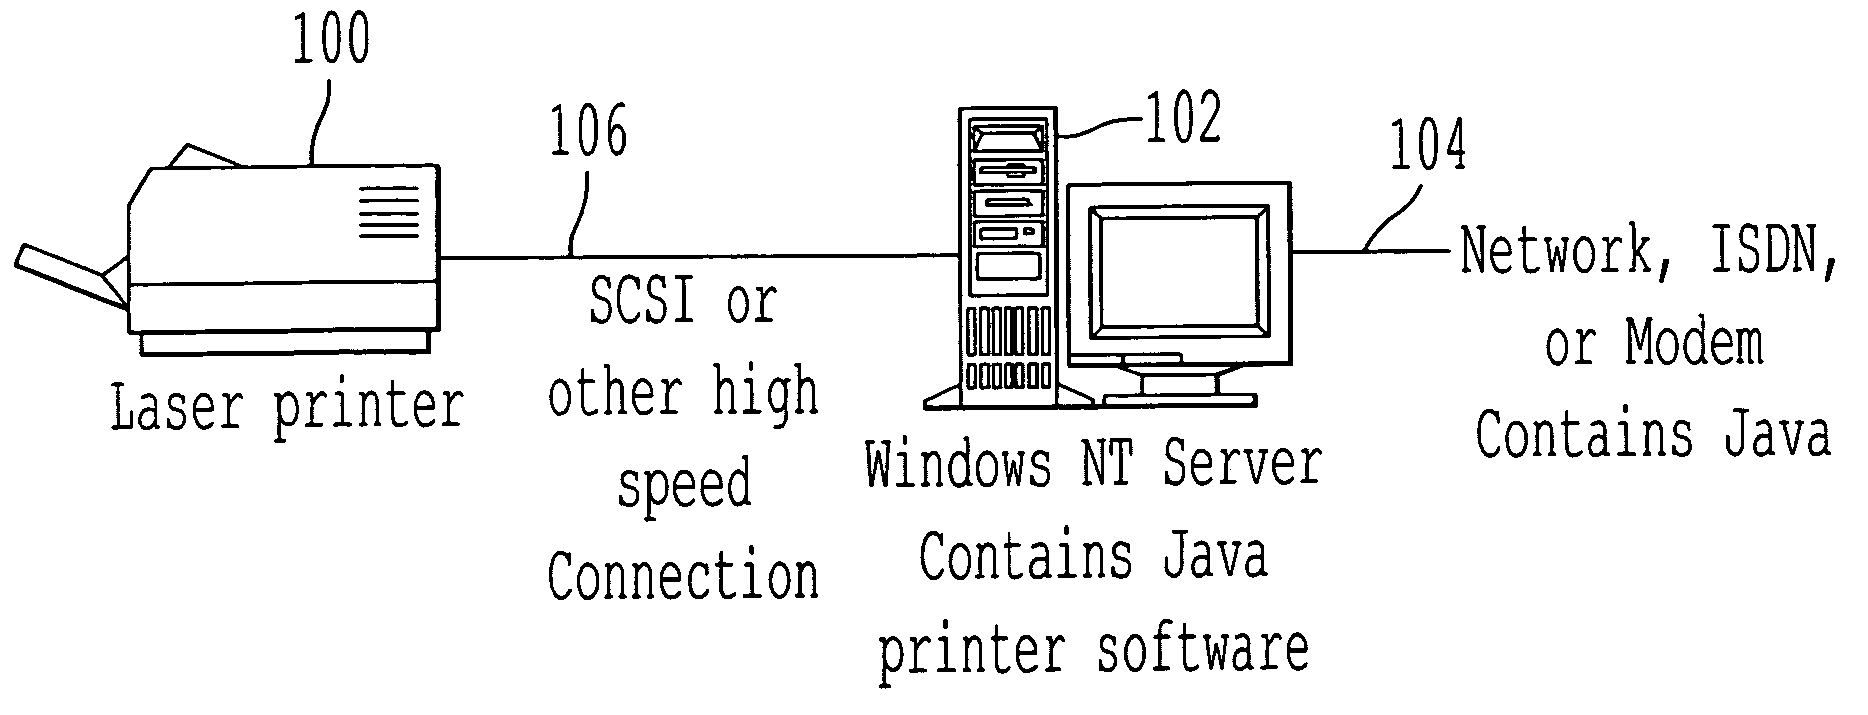 Java printer